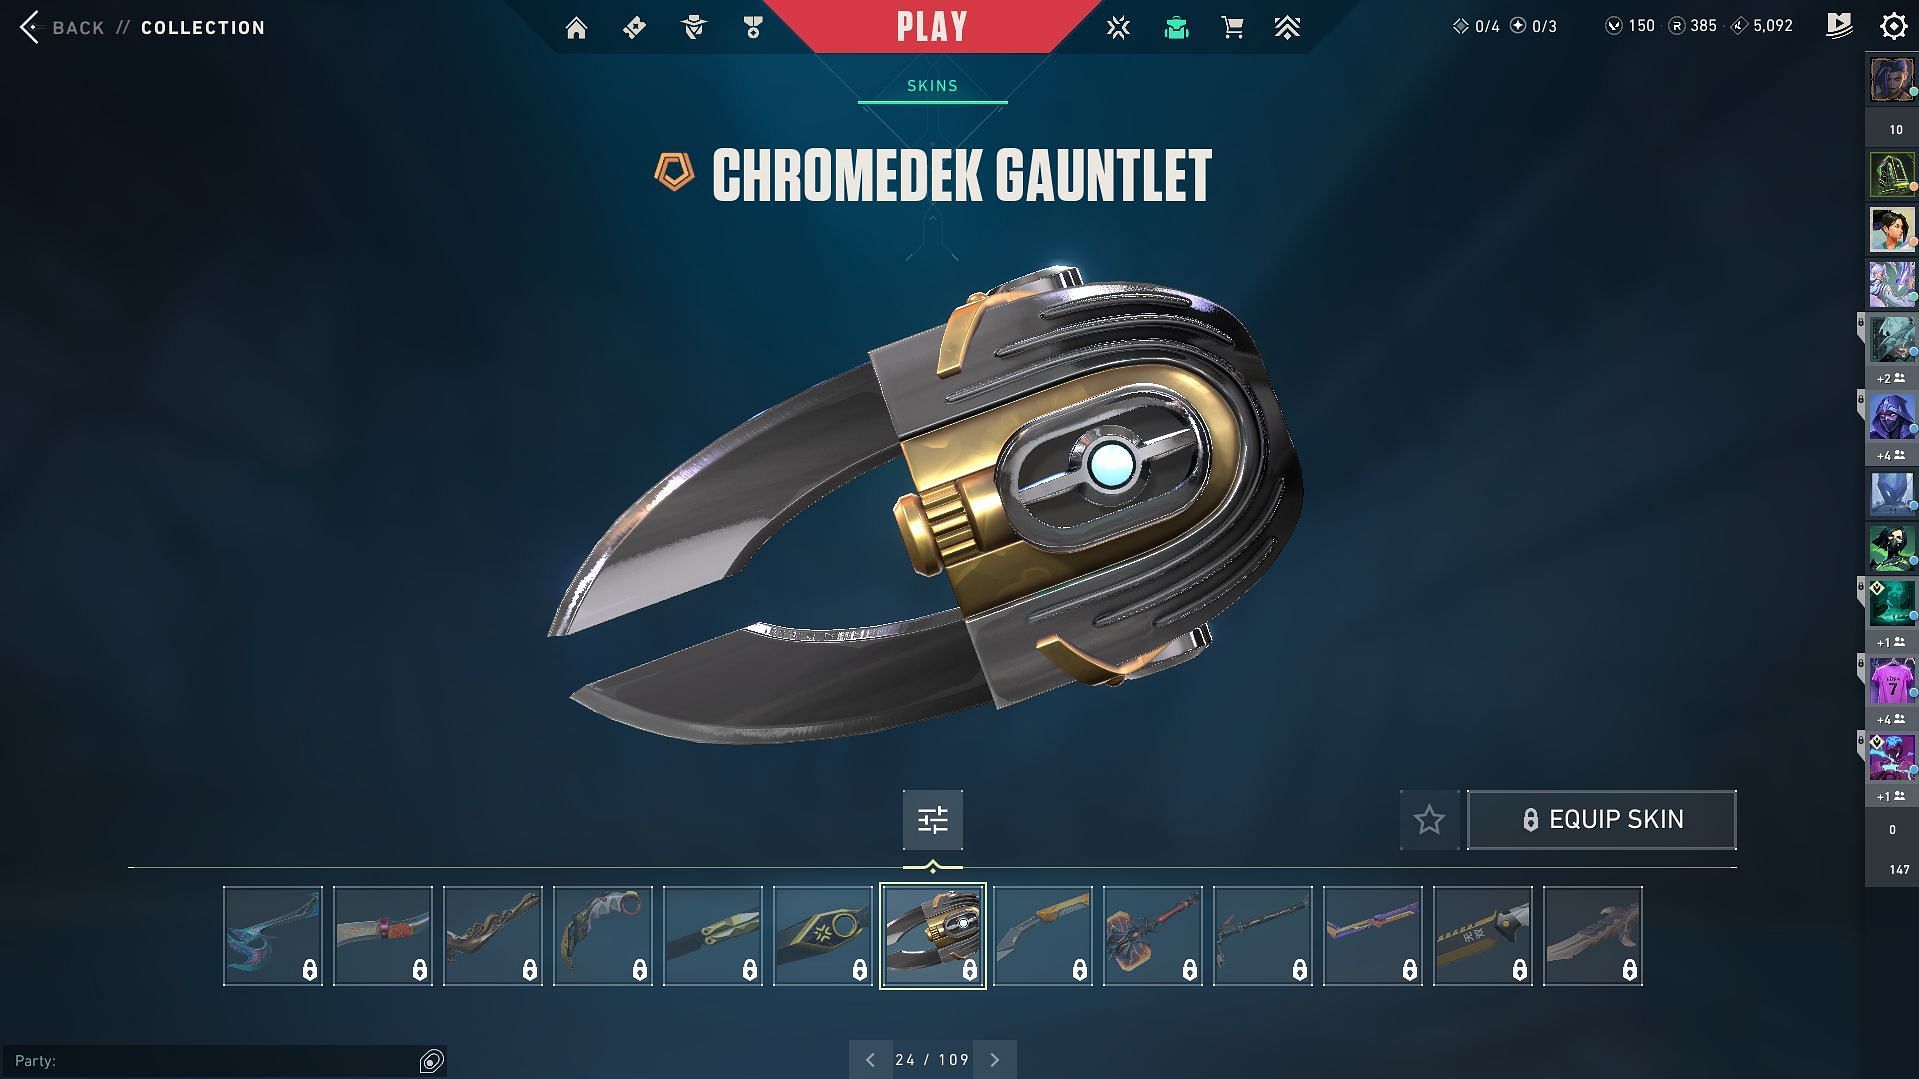 Chromedek Gauntlet in-game view (Image via Riot Games)